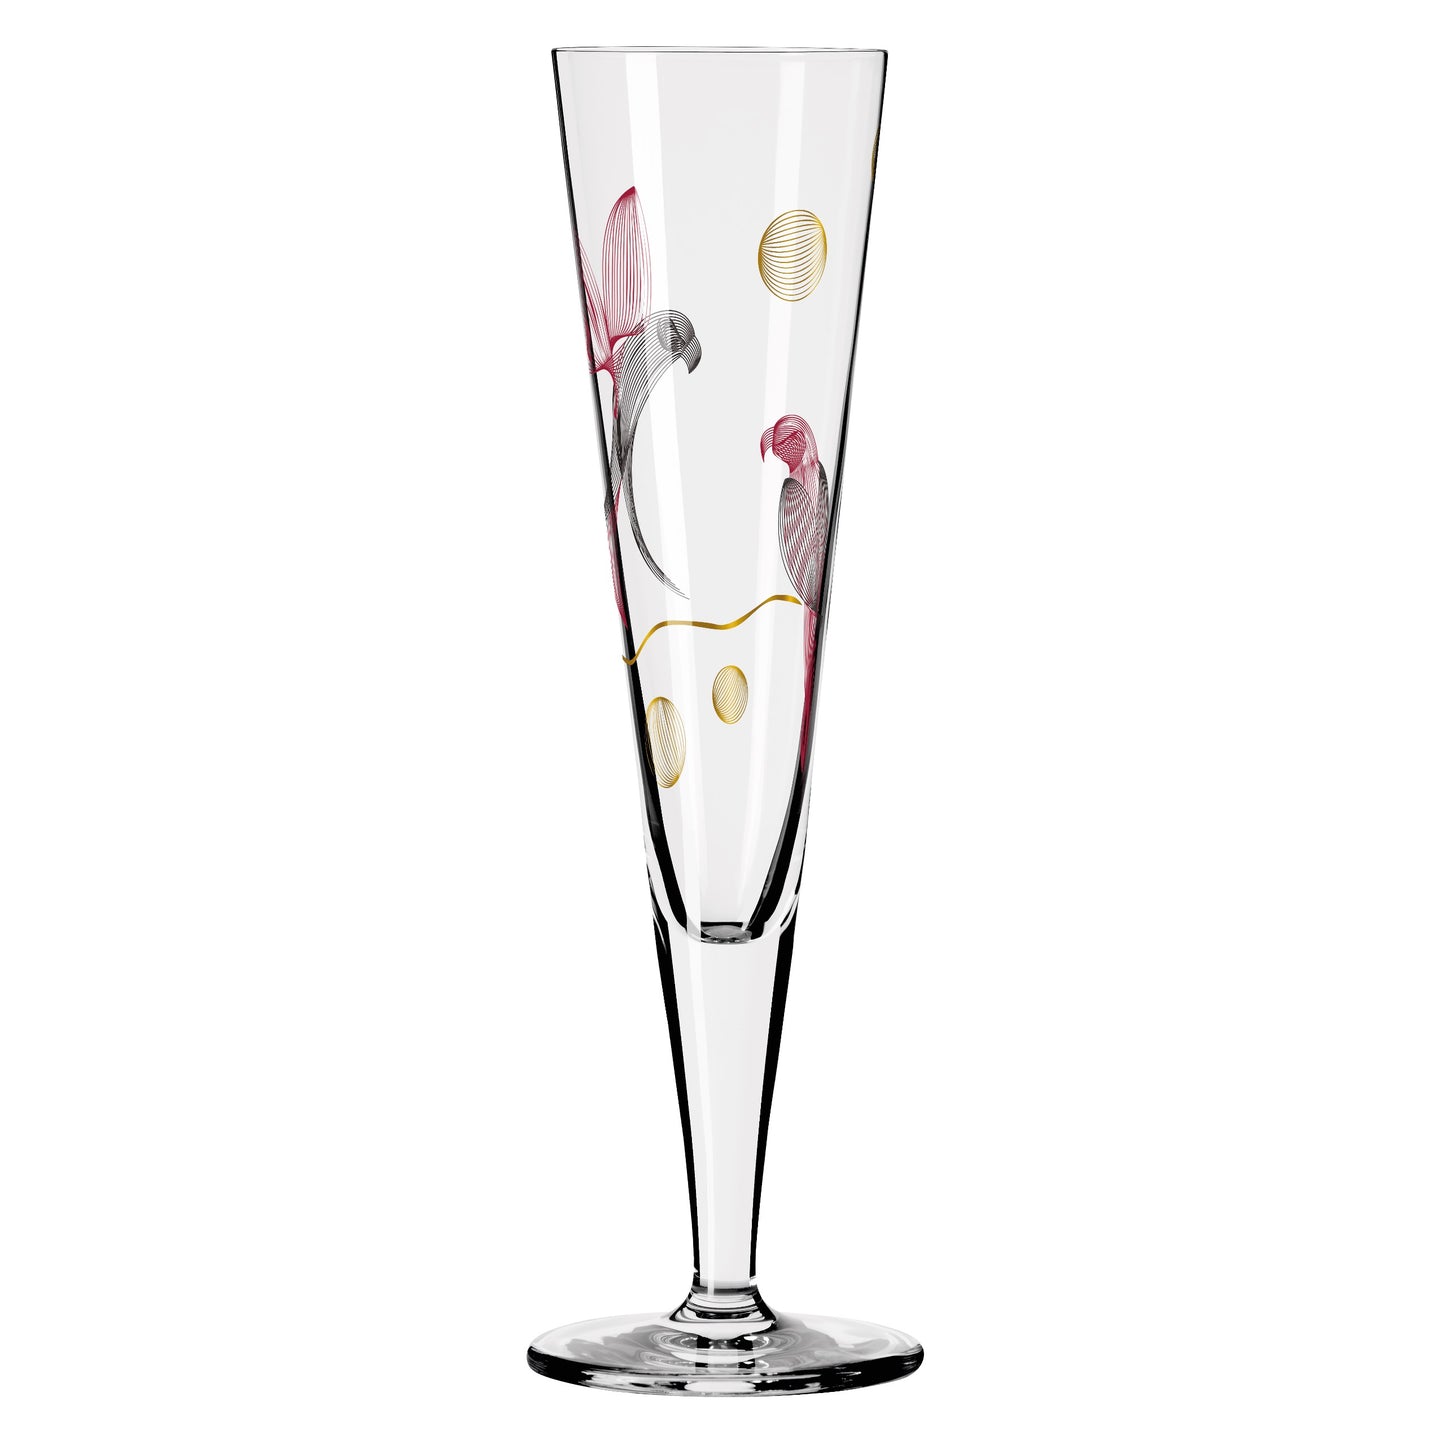 Goldnacht #16, Champagne Glass